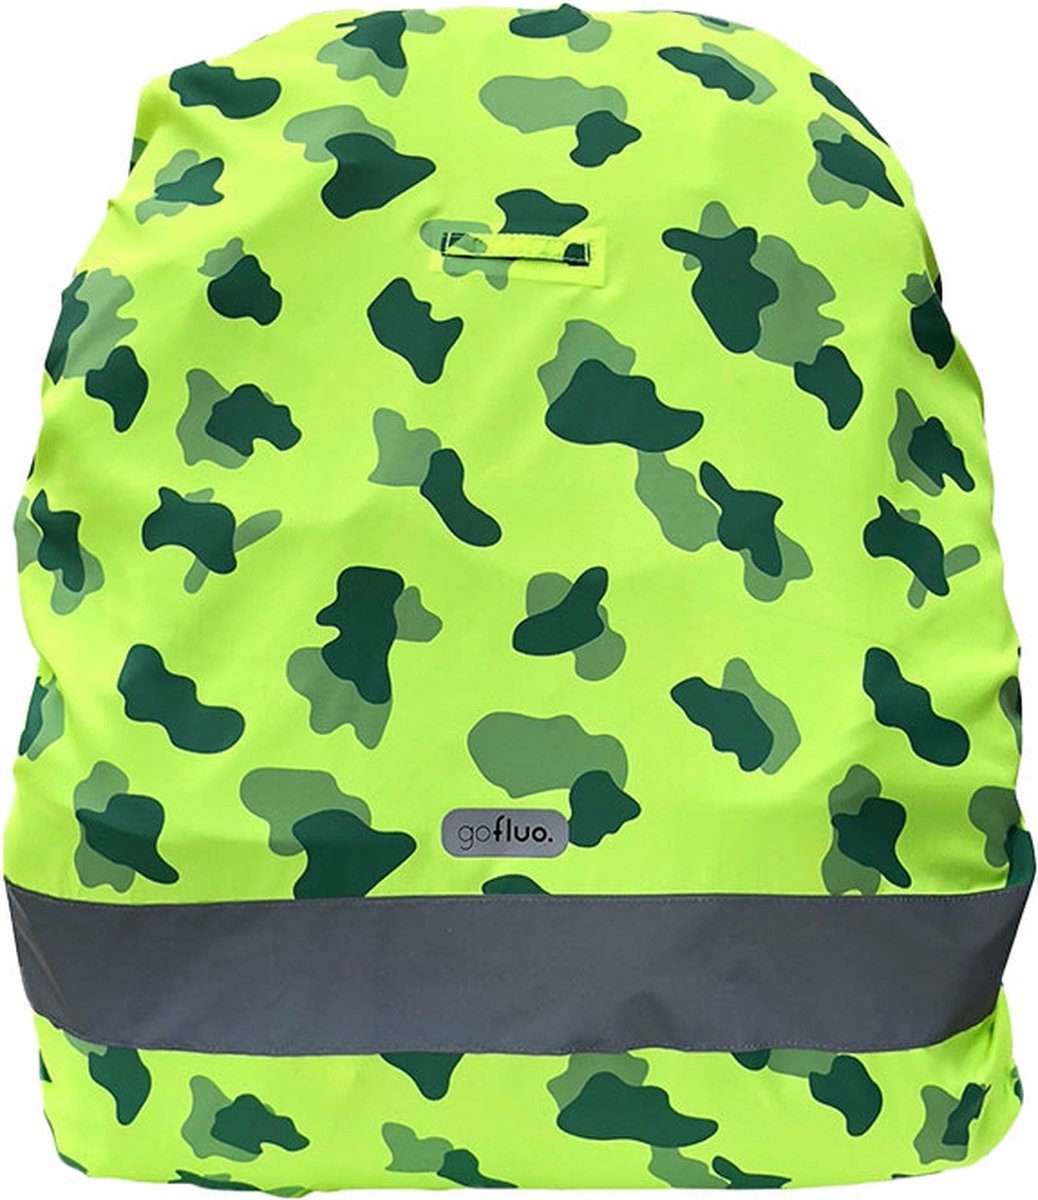 Gofluo - Regenhoes Rugzak Cammi - Camouflage - Reflecterend - Fluo - Rugzakhoes - Fluogeel - 24 L - One size - Green